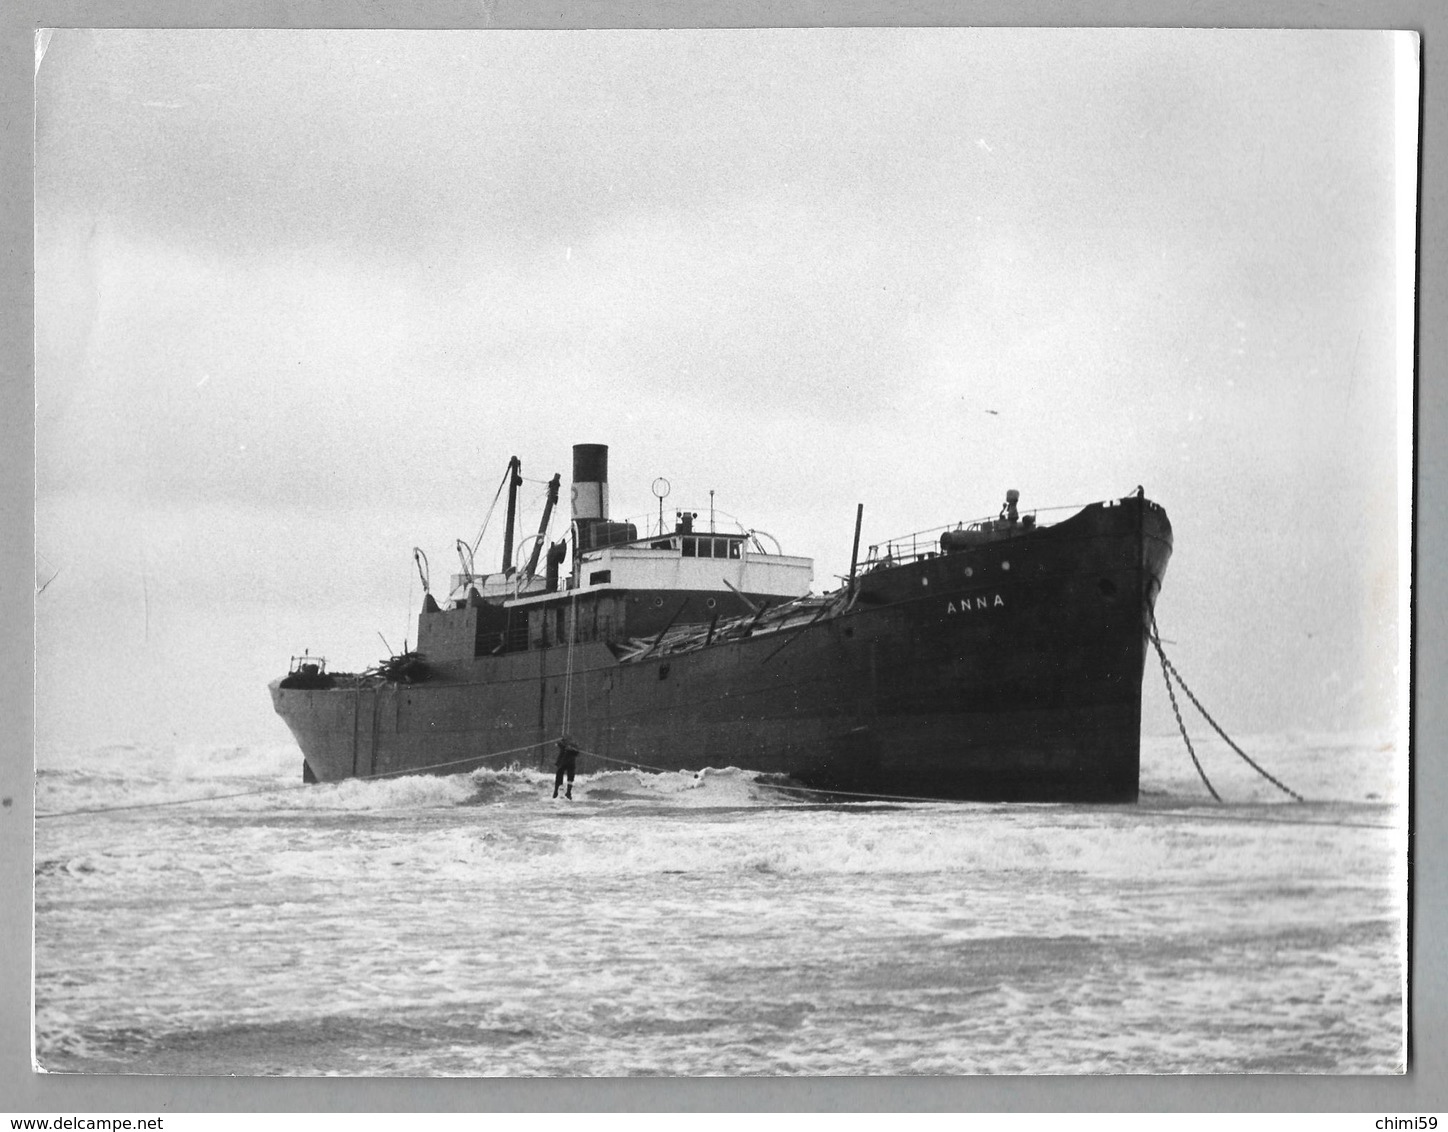 PHOTO PRESS 1959 -  FREIGHTER ANNA -CM.  24X19  Bateau  Barco  Bateaux Nave Ship Boat Cargo - Bateaux